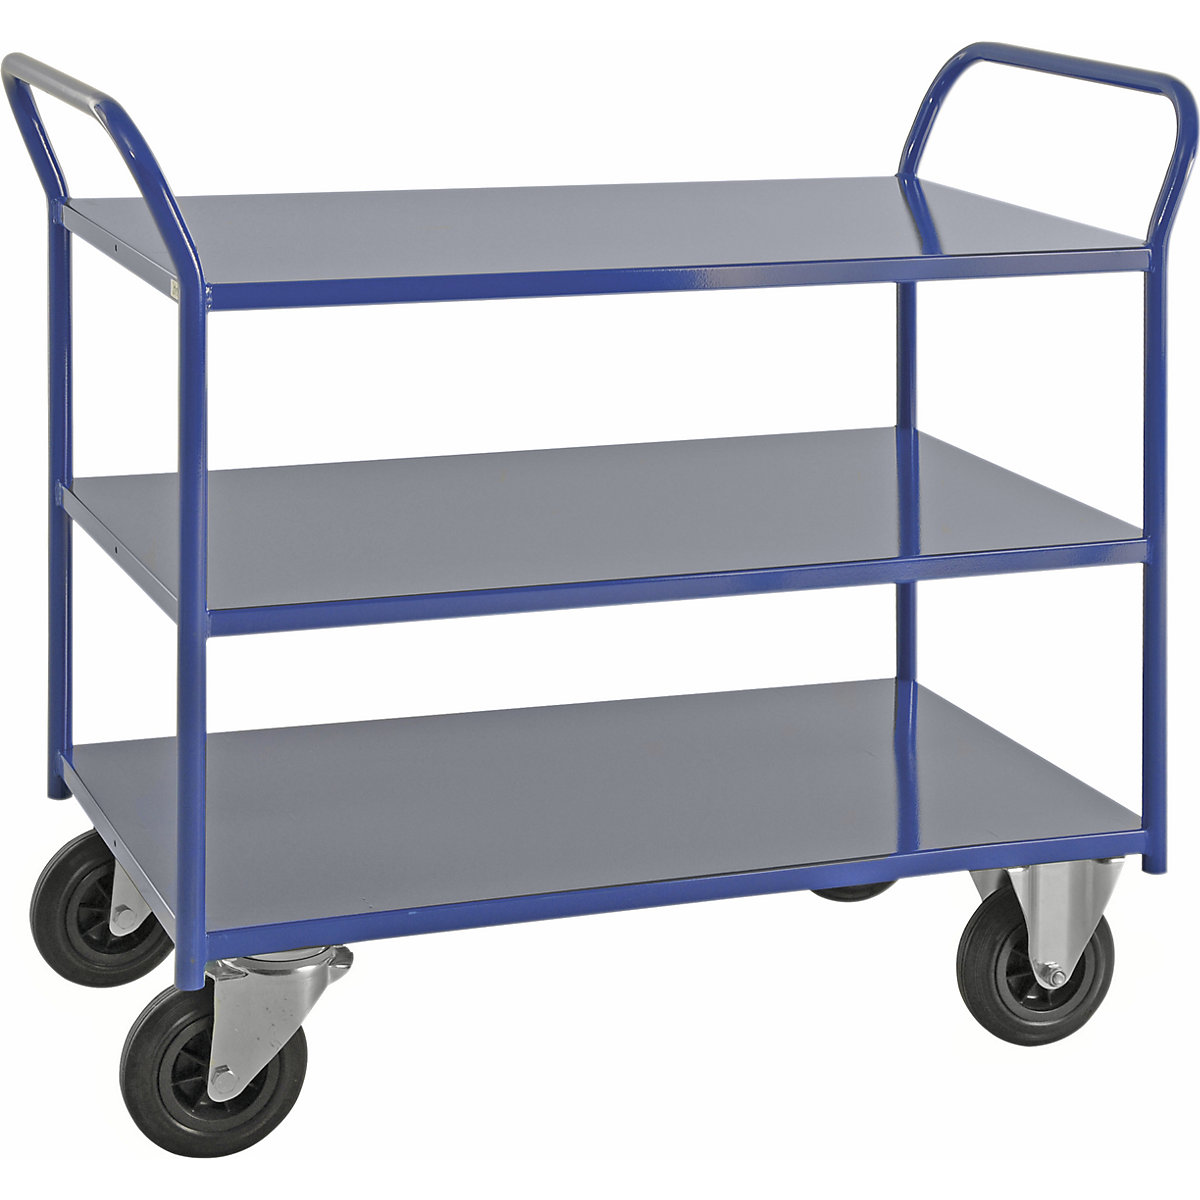 KM41 table trolley – Kongamek, 3 shelves, LxWxH 1080 x 450 x 975 mm, blue, 2 swivel castors and 2 fixed castors, 5+ items-8